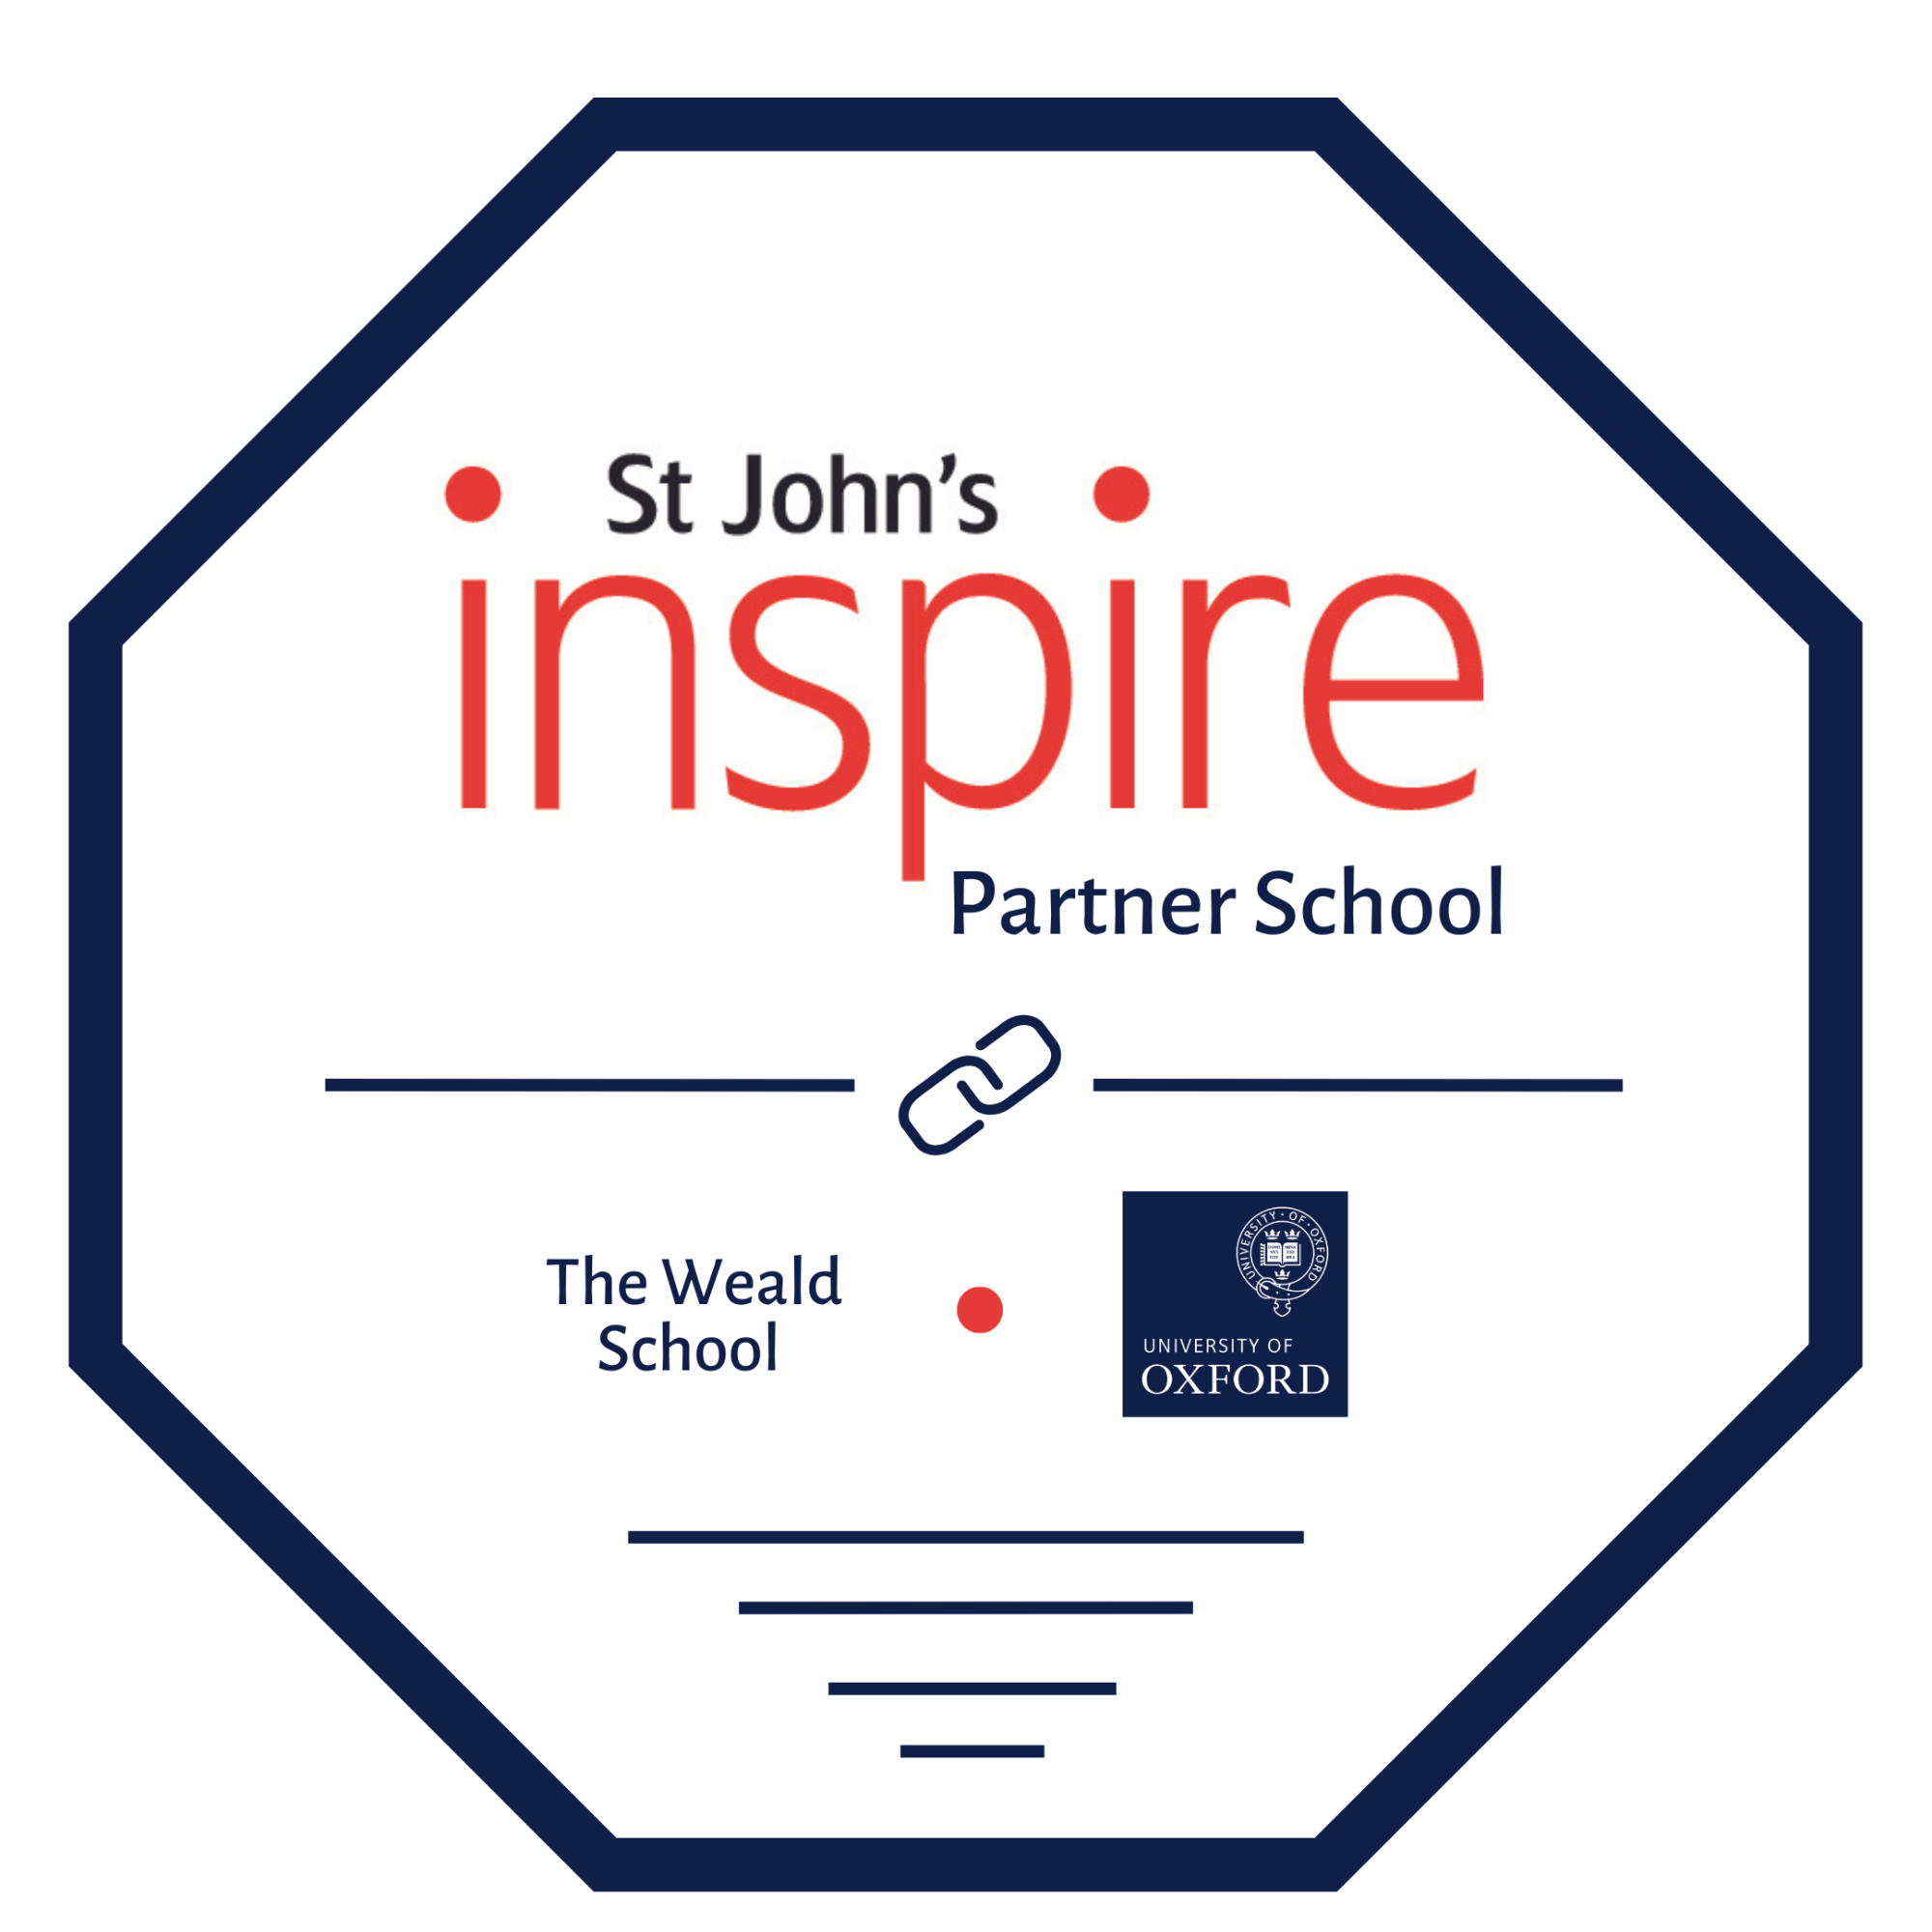 St Johns's inspire Partner School